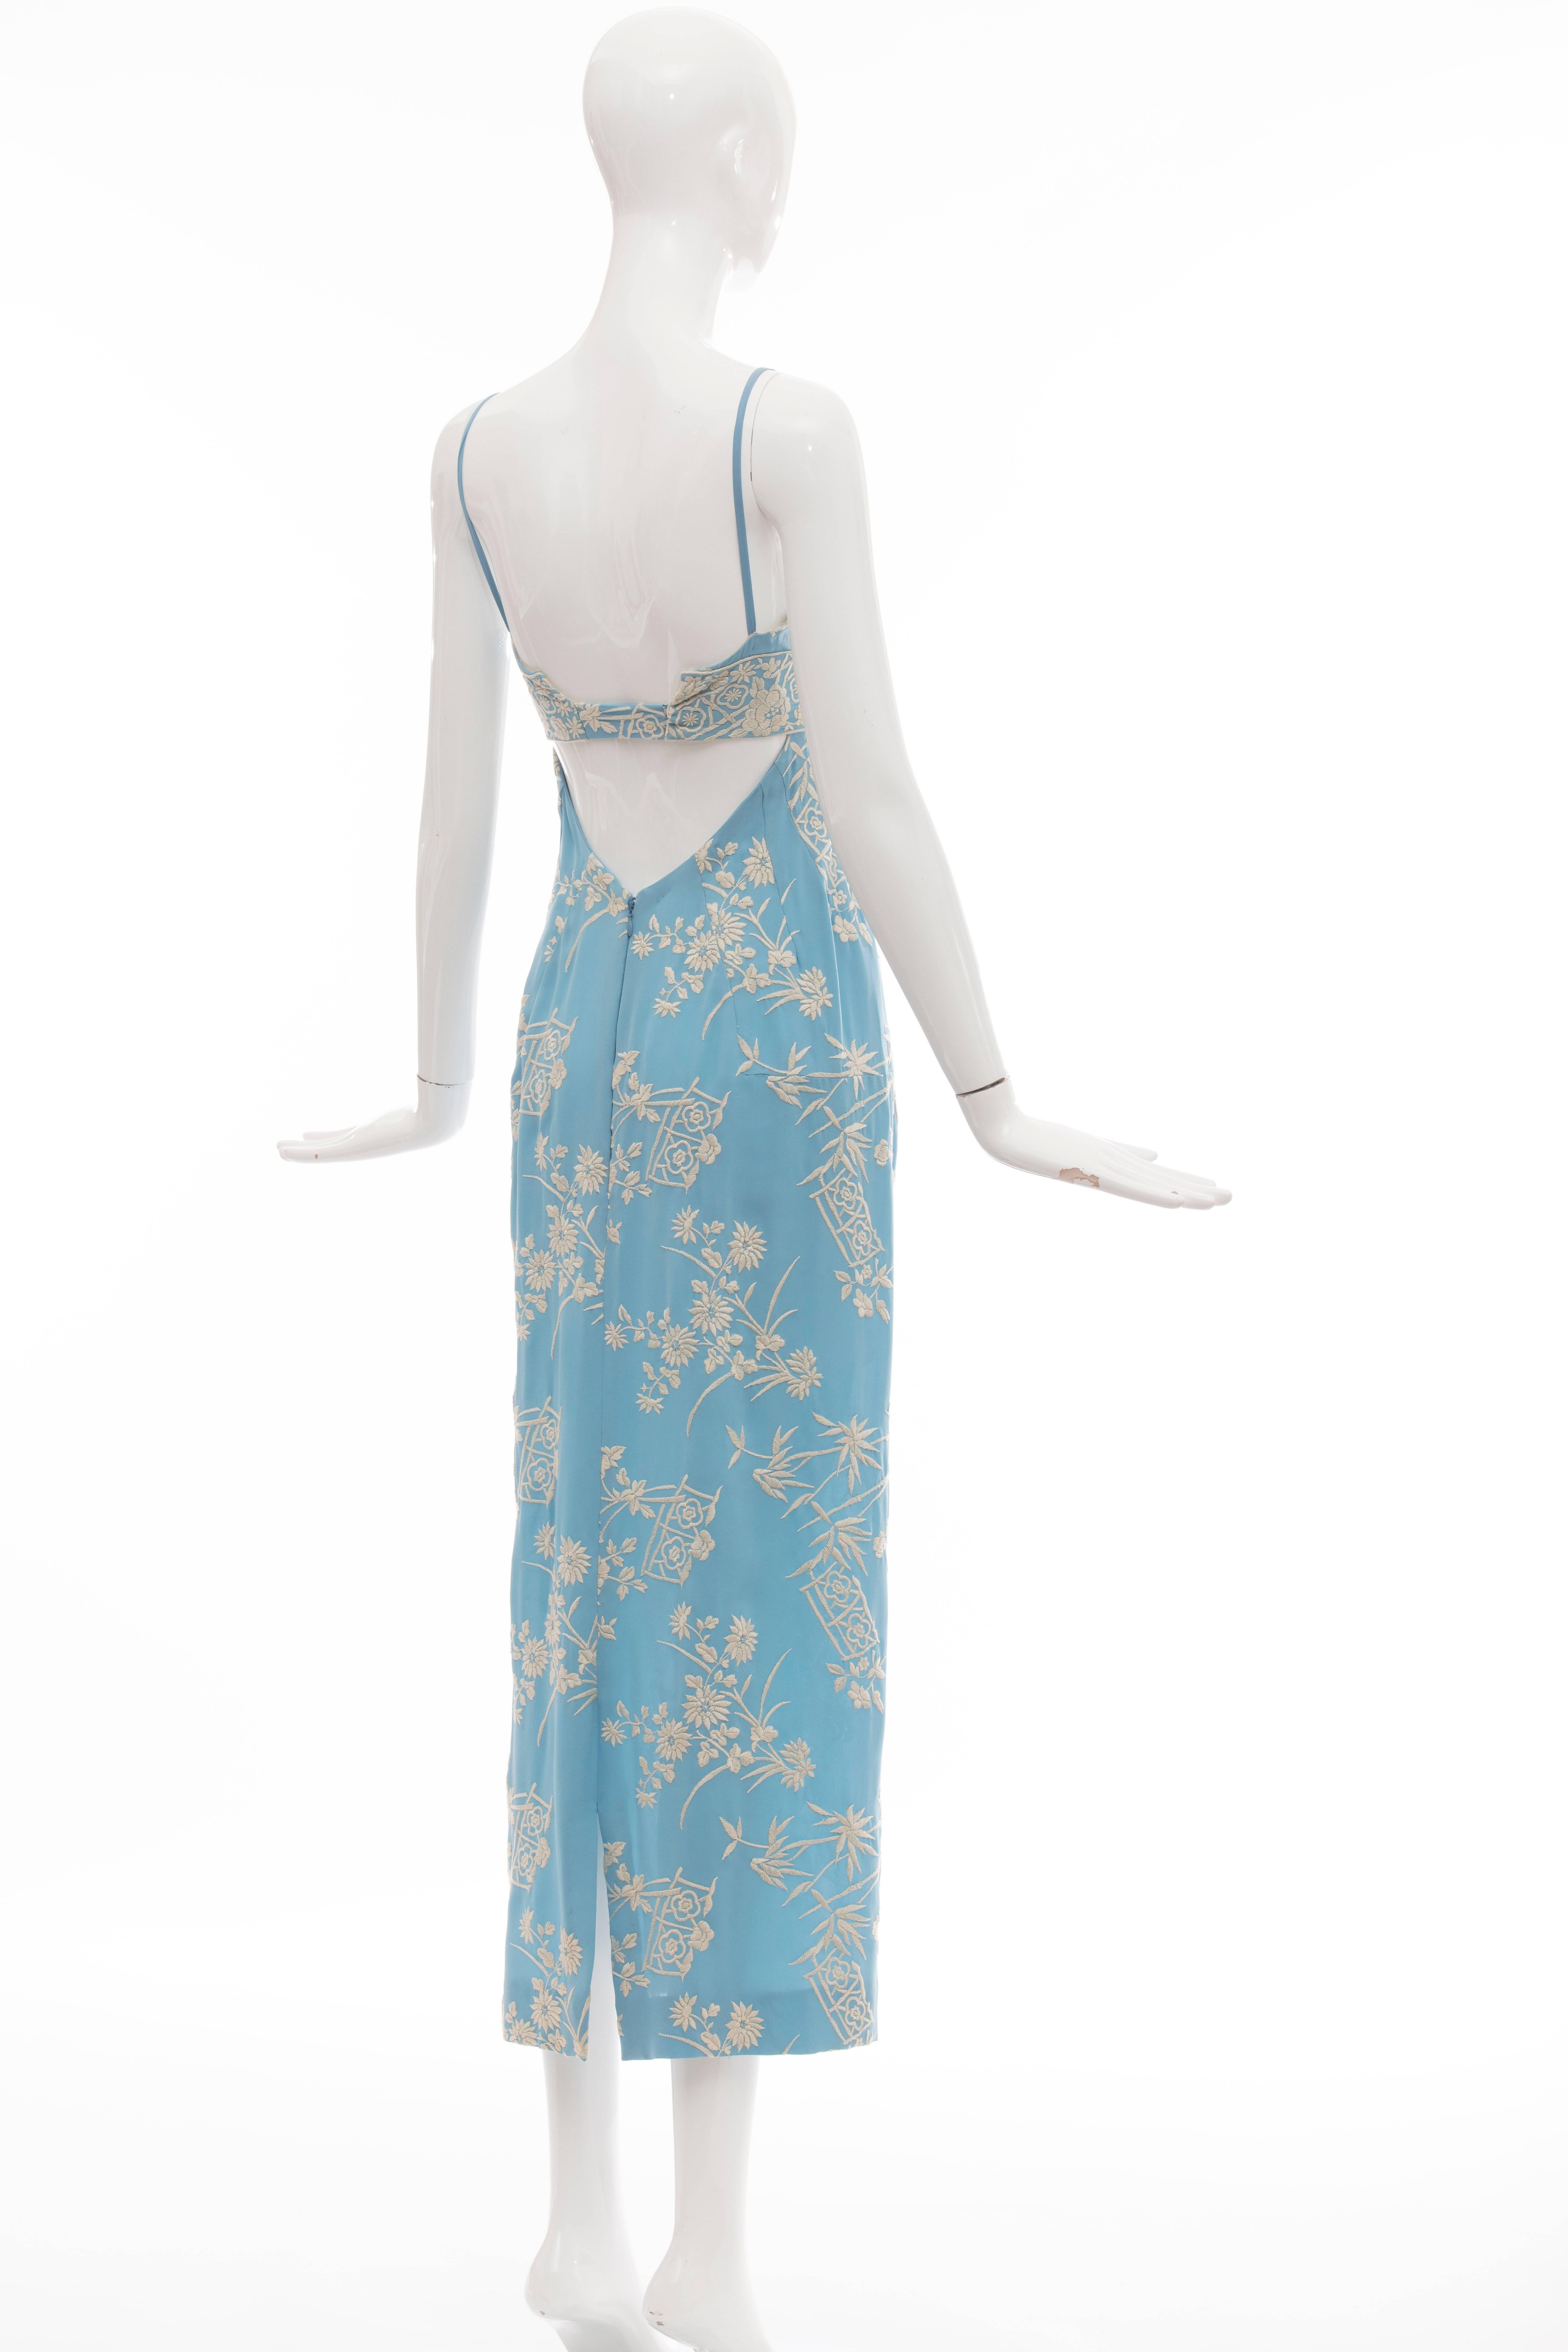 Dolce & Gabbana Silk Floral Embroidered Dress 